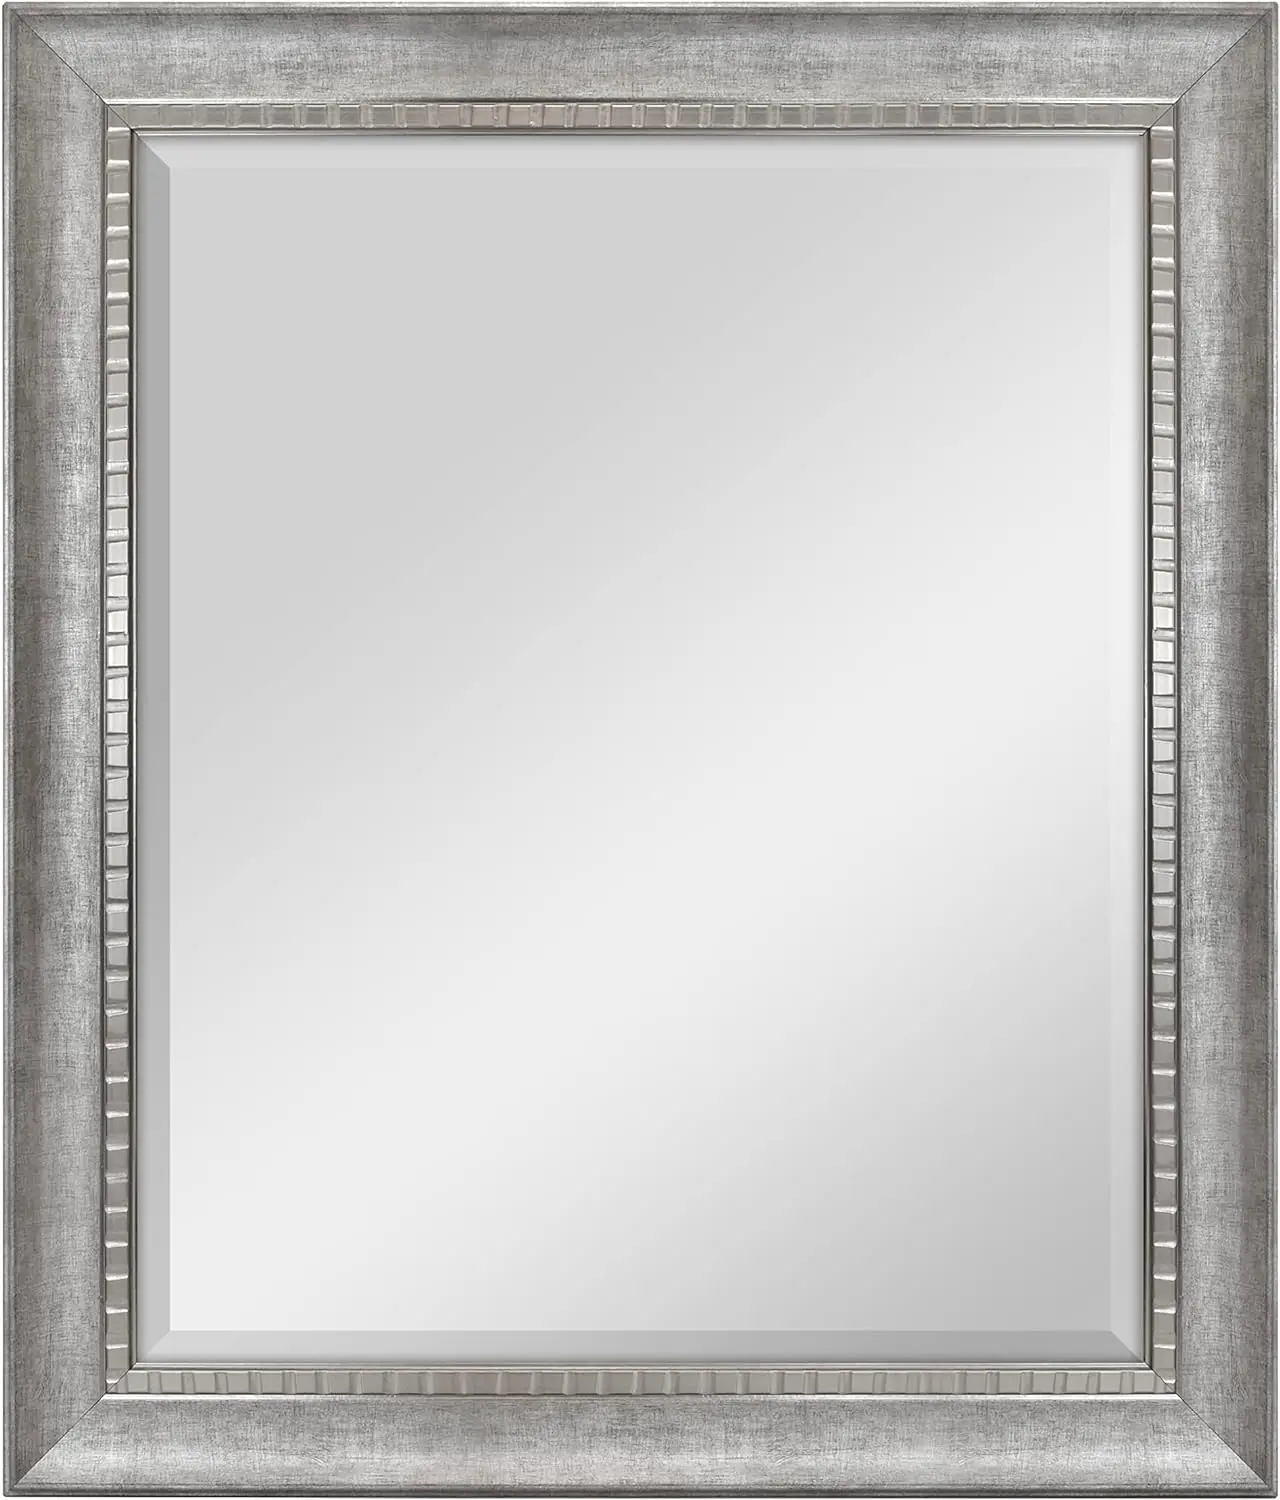 

Зеркало с наклоном дюйма, общий размер 27,5x33,5 дюйма, серебристое (20564)